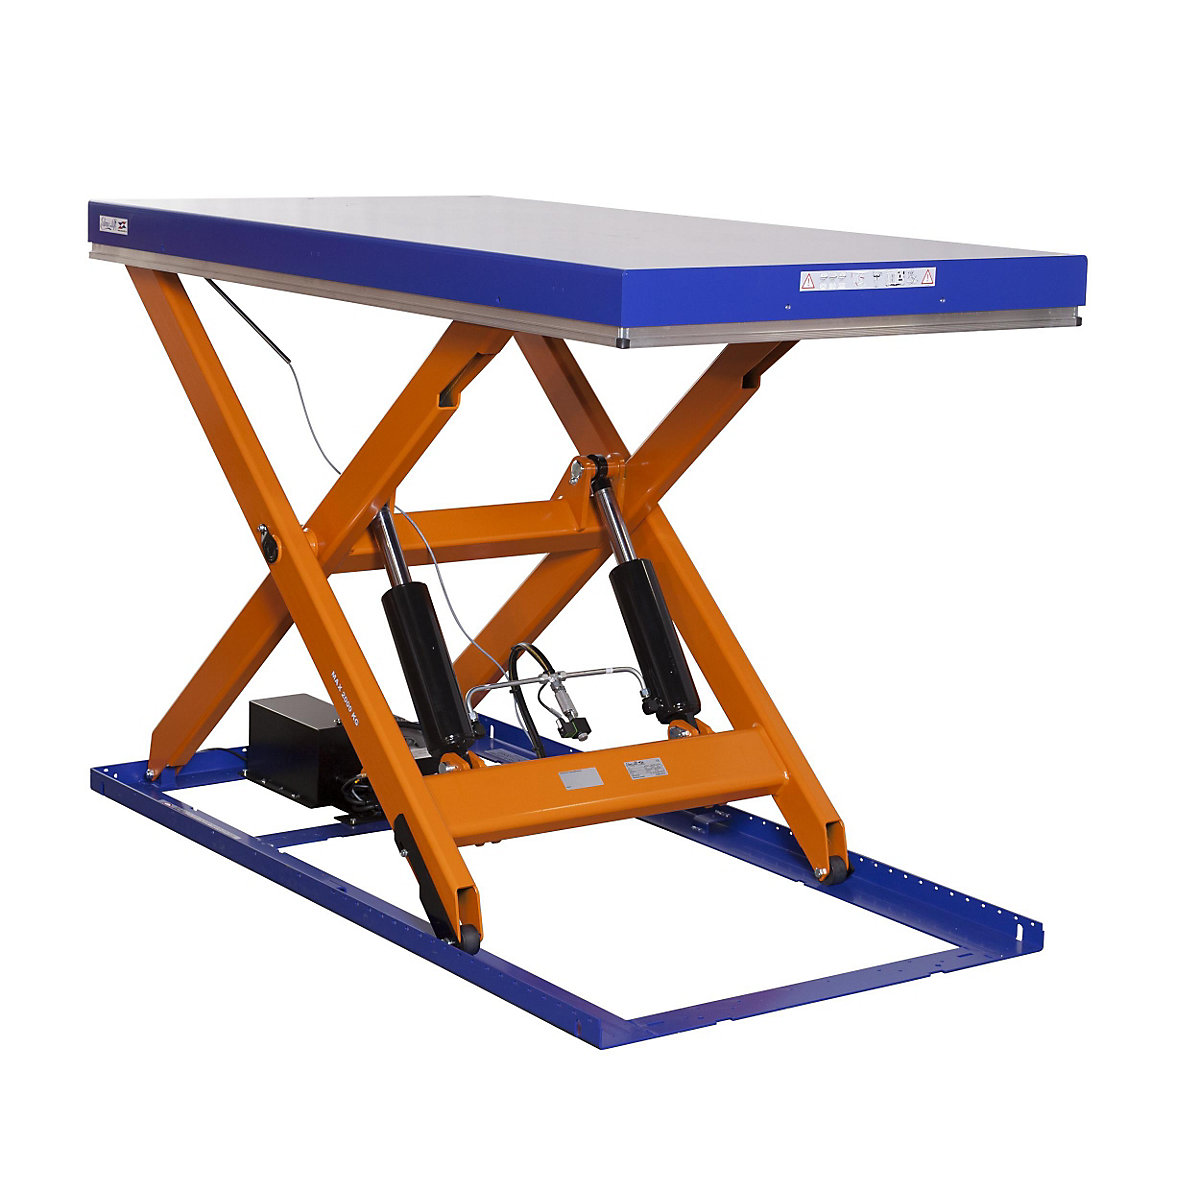 Compact lift table – Edmolift, max. load 2000 kg, platform LxW 2200 x 1200 mm, effective lift 1500 mm